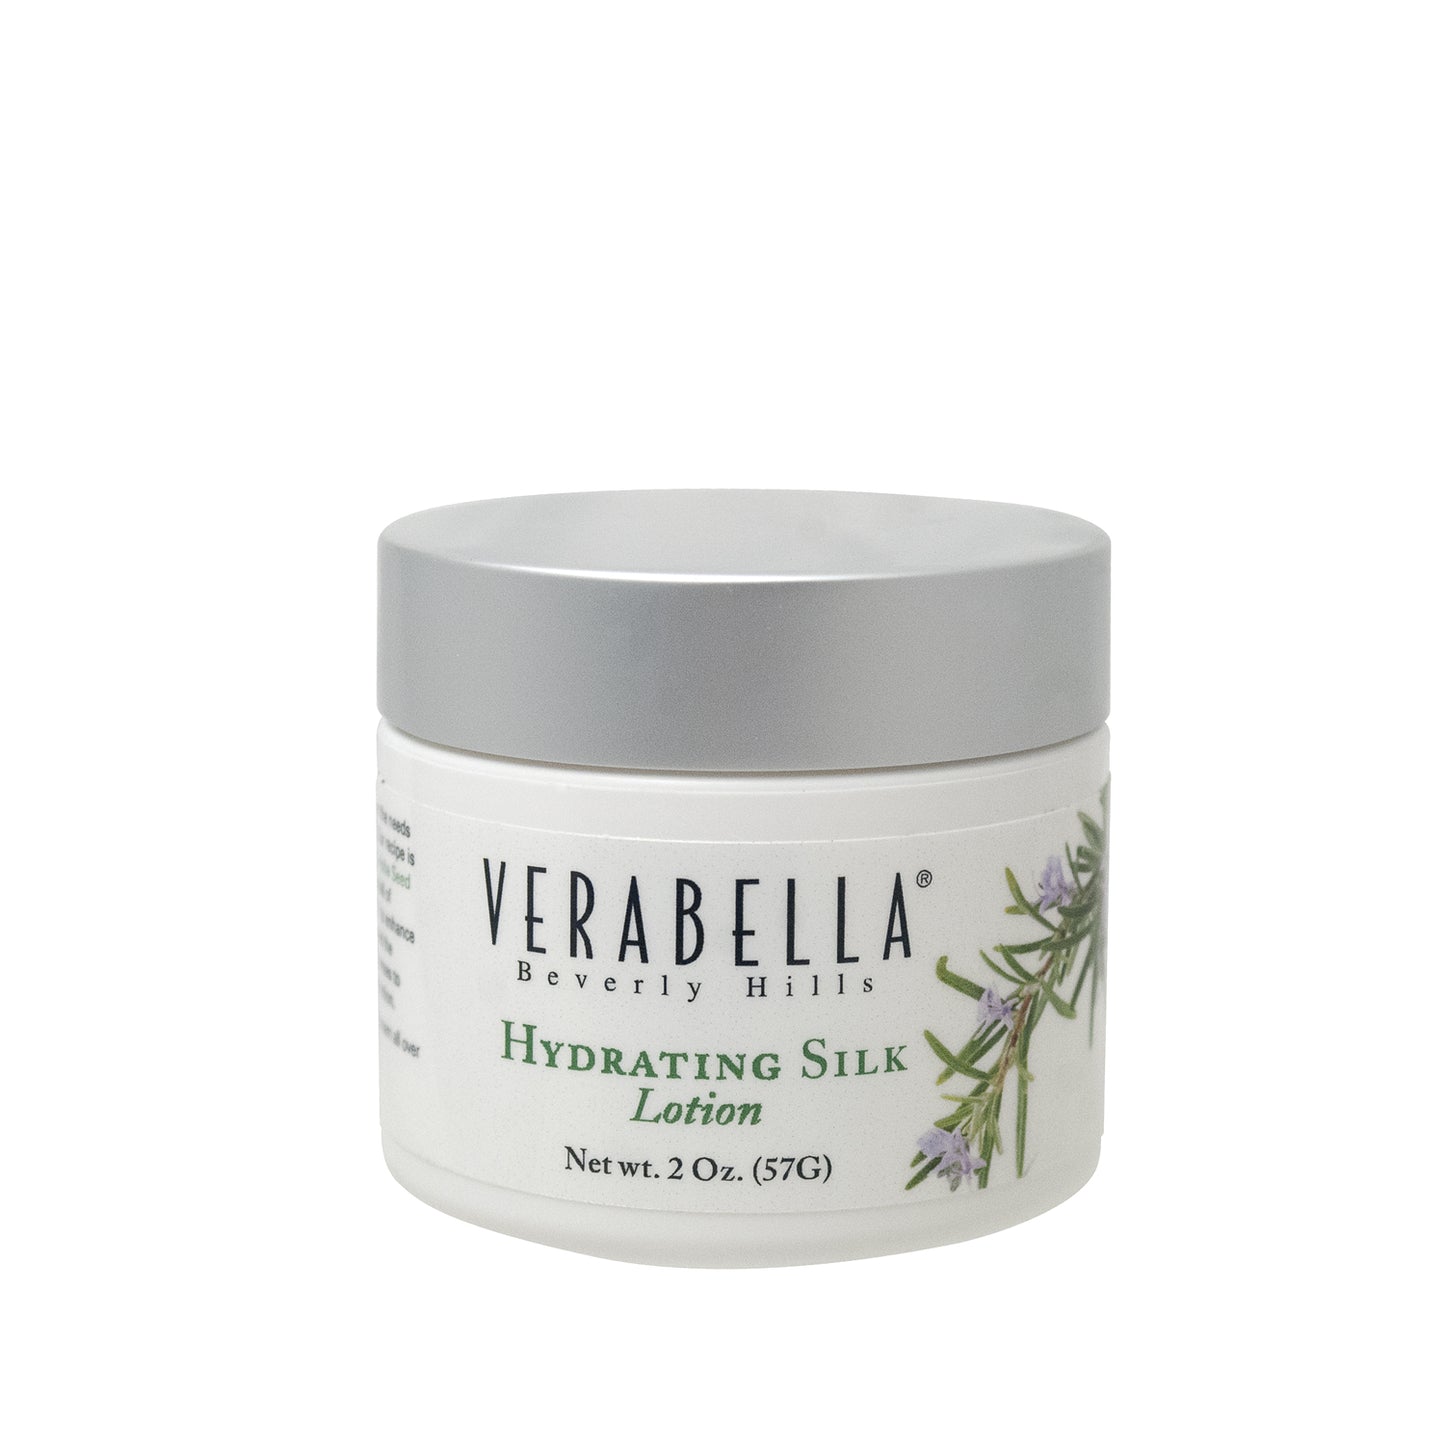 Verabella Hydrating Silk product image